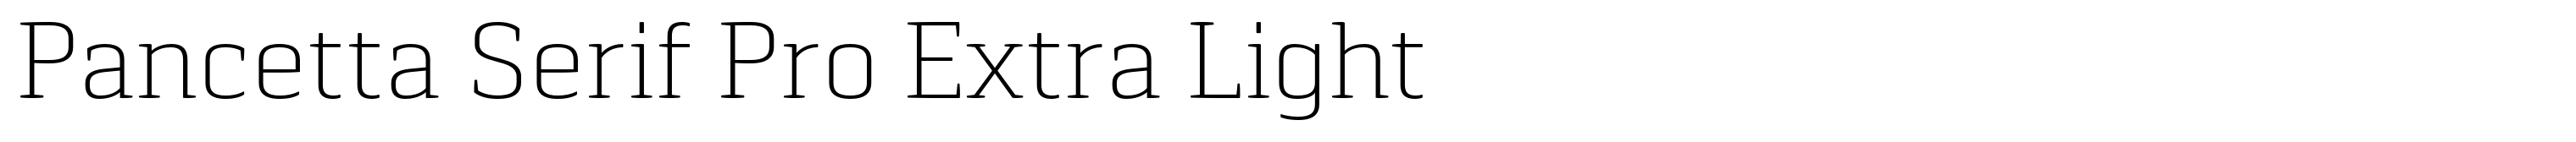 Pancetta Serif Pro Extra Light